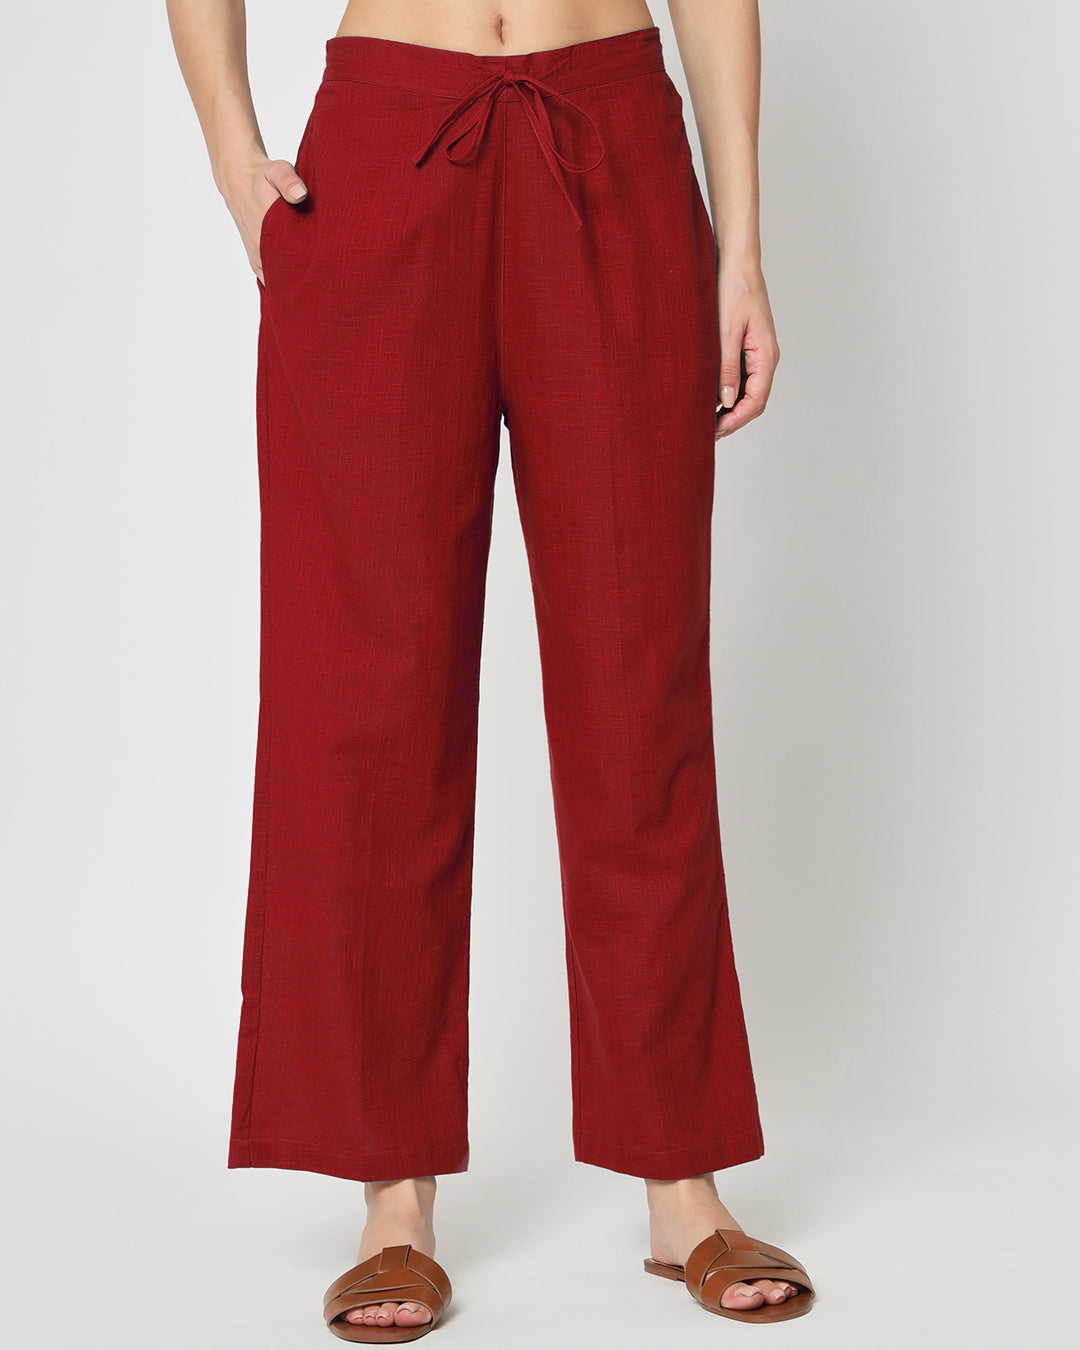 Combo: Iris Pink & Classic Red Pants- Set of 2